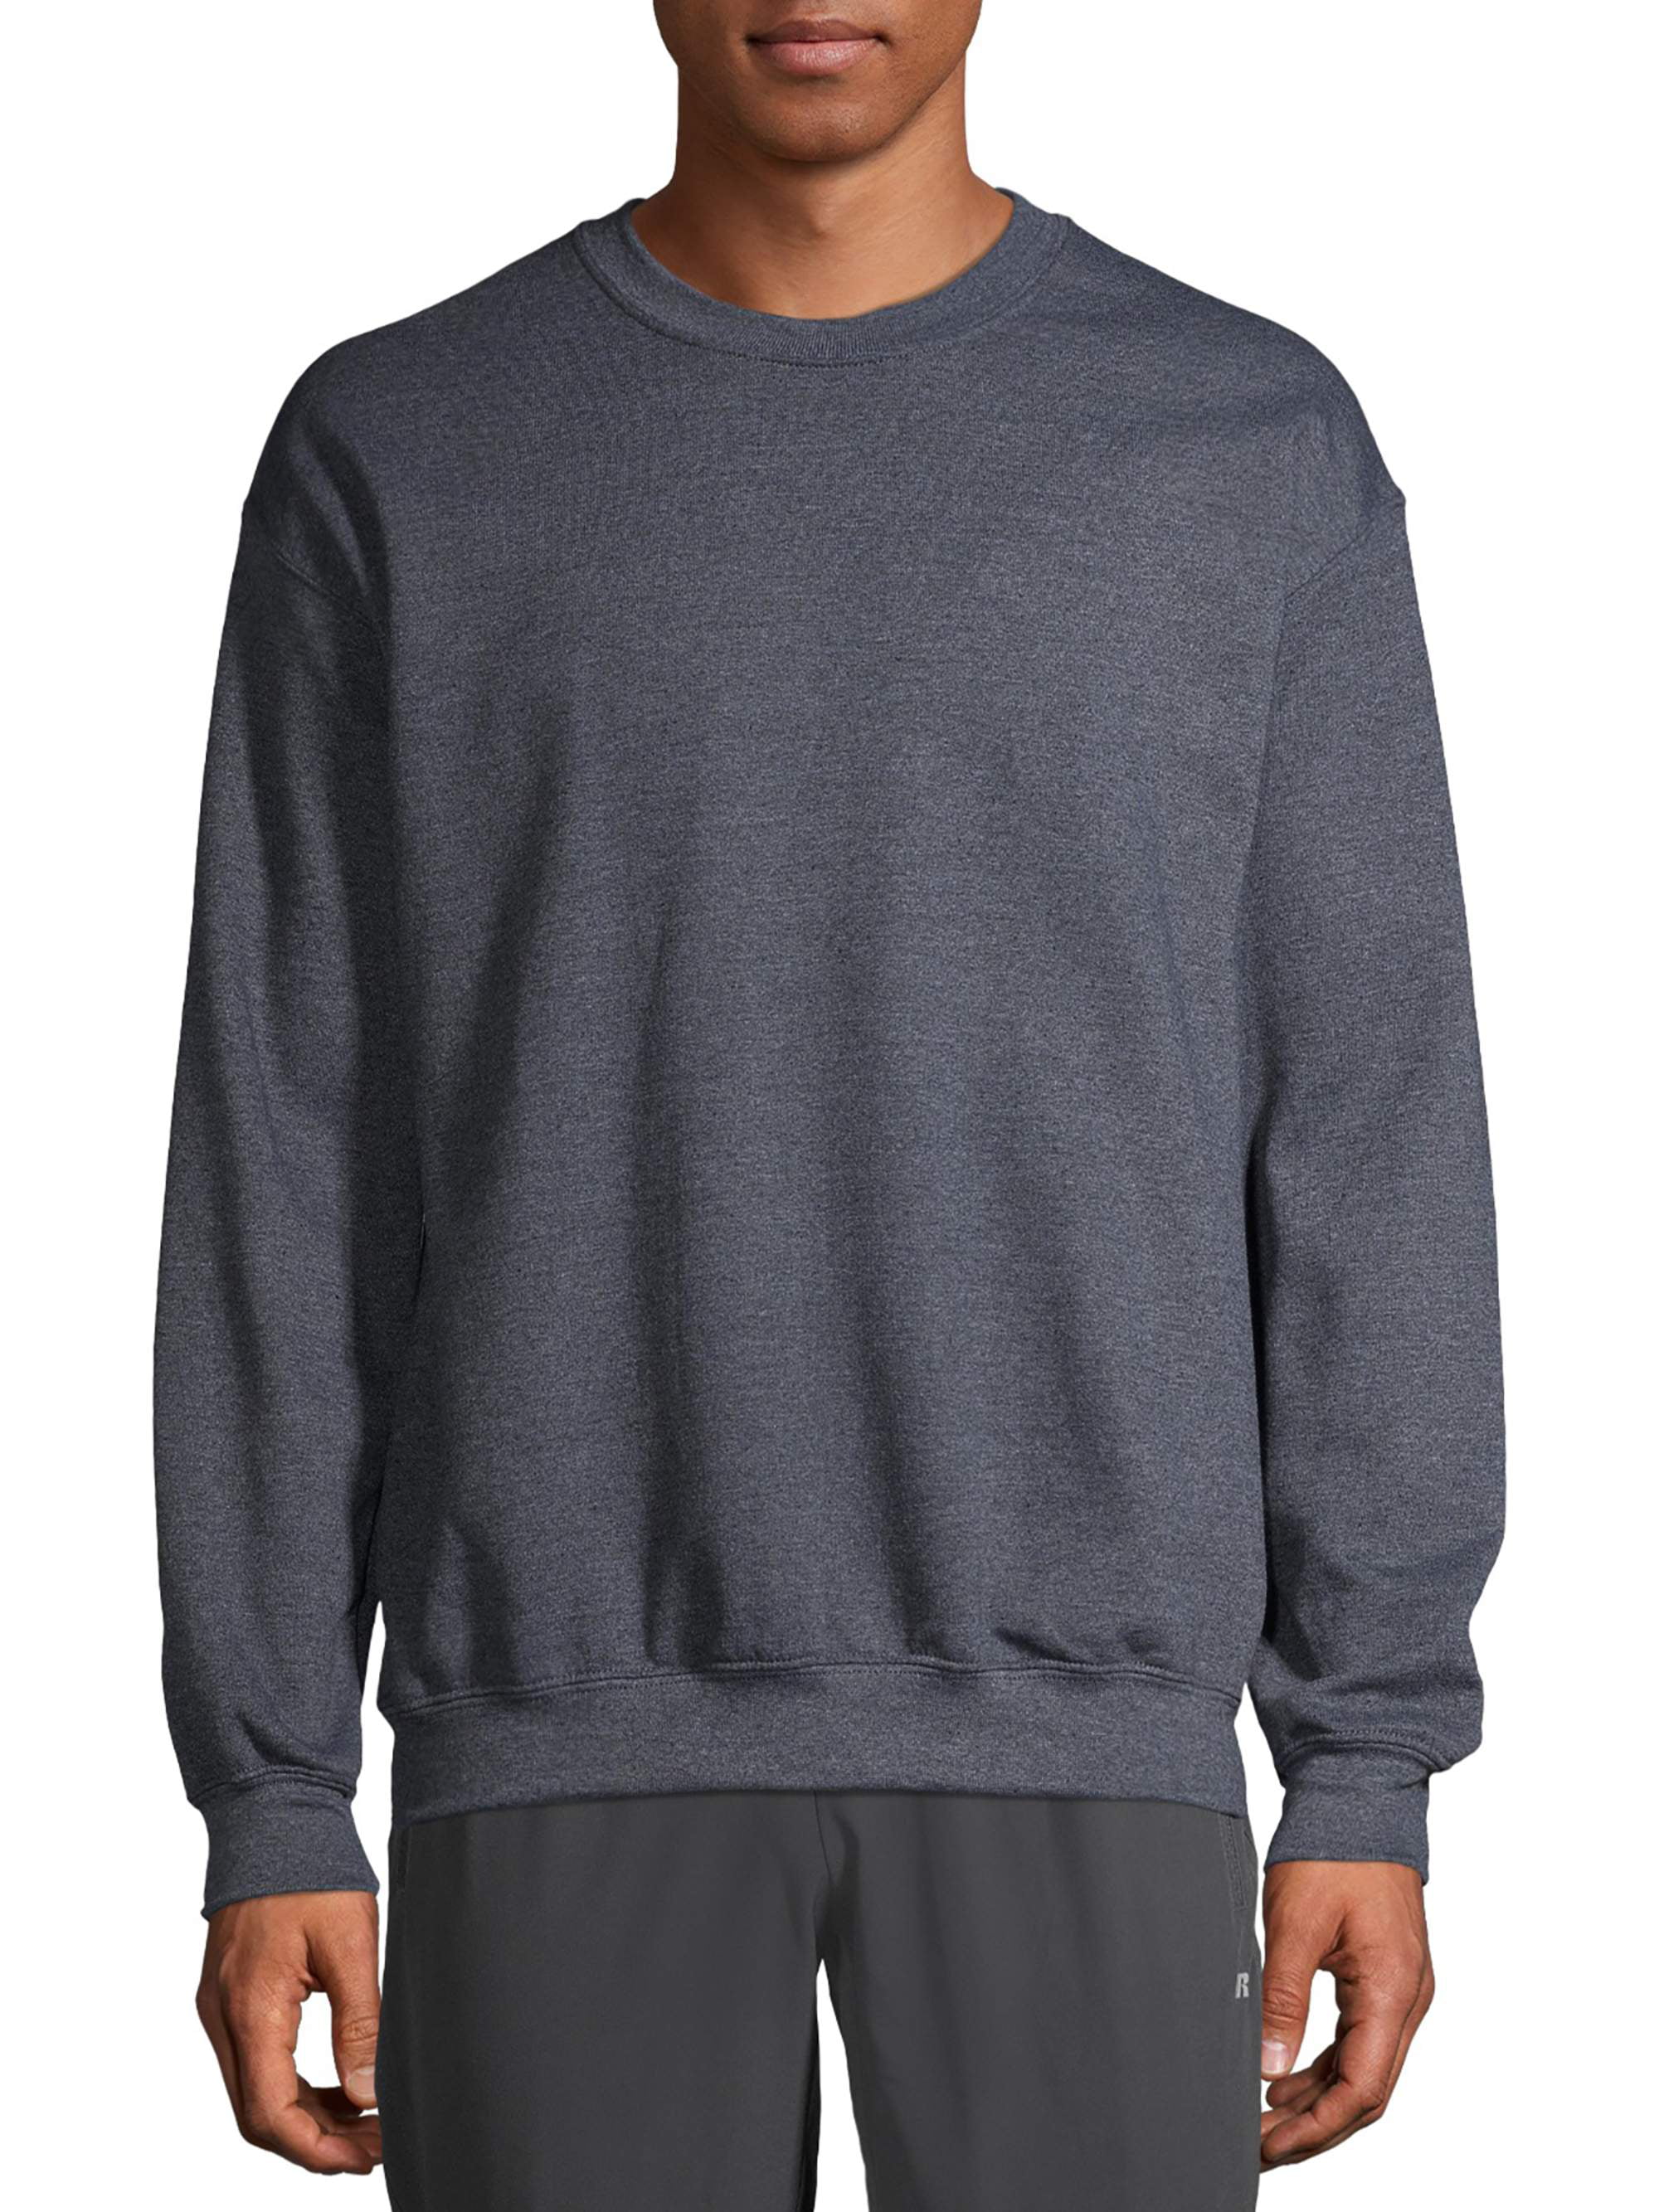 Gildan Men's Fleece Crewneck Sweatshirt Gray SIZE L --A15 ...